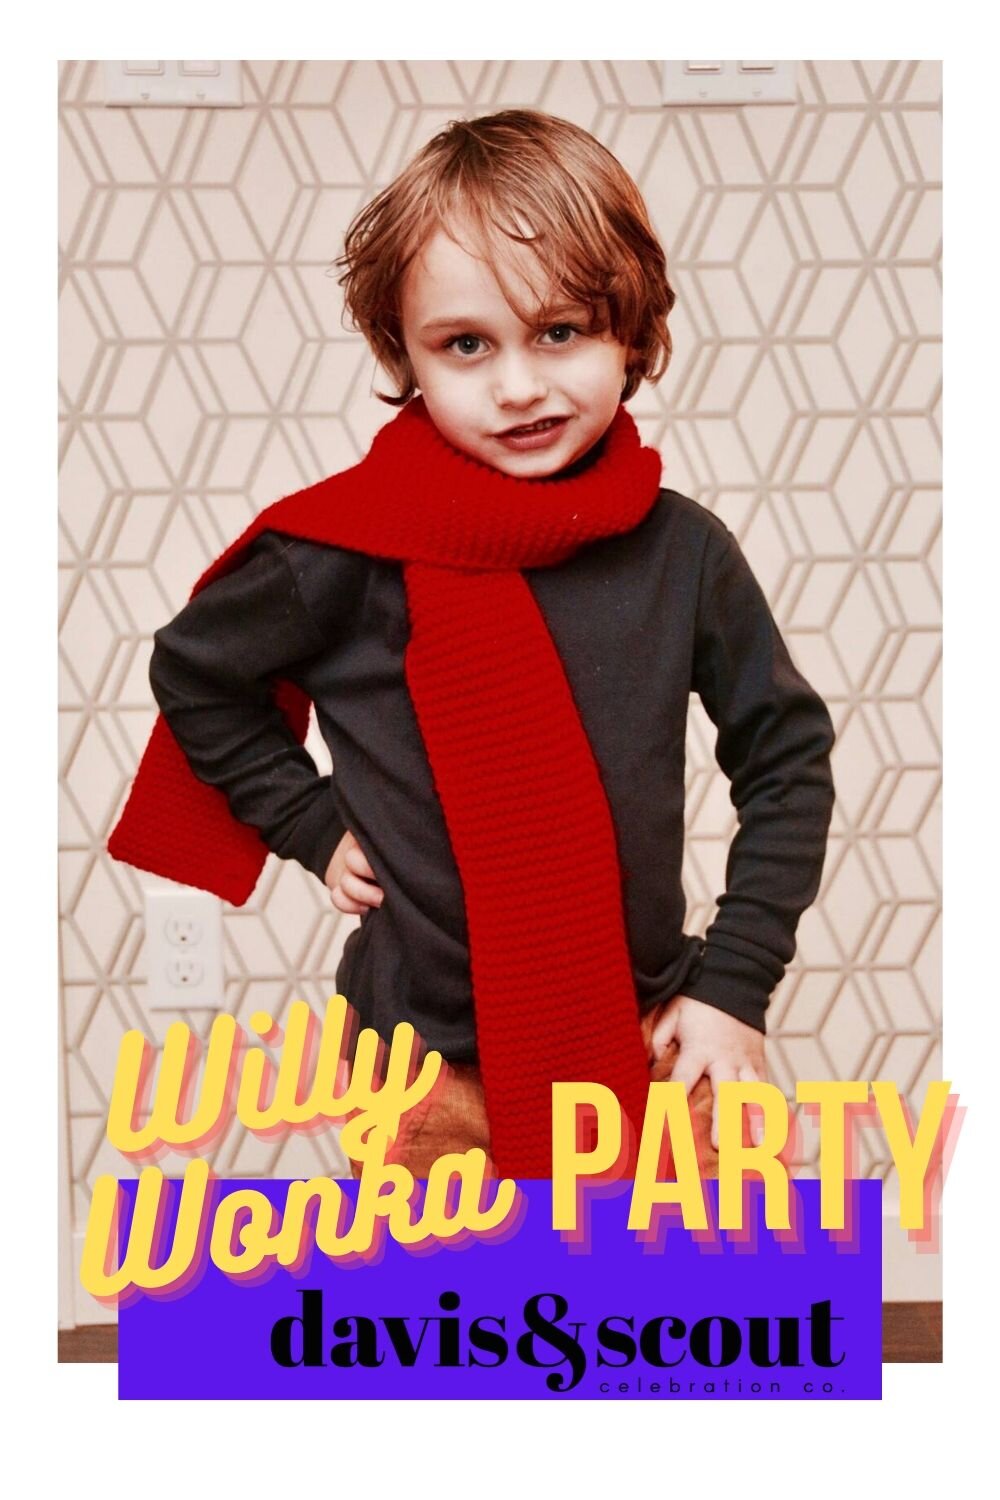 Willy Wonka partyjpg.jpg